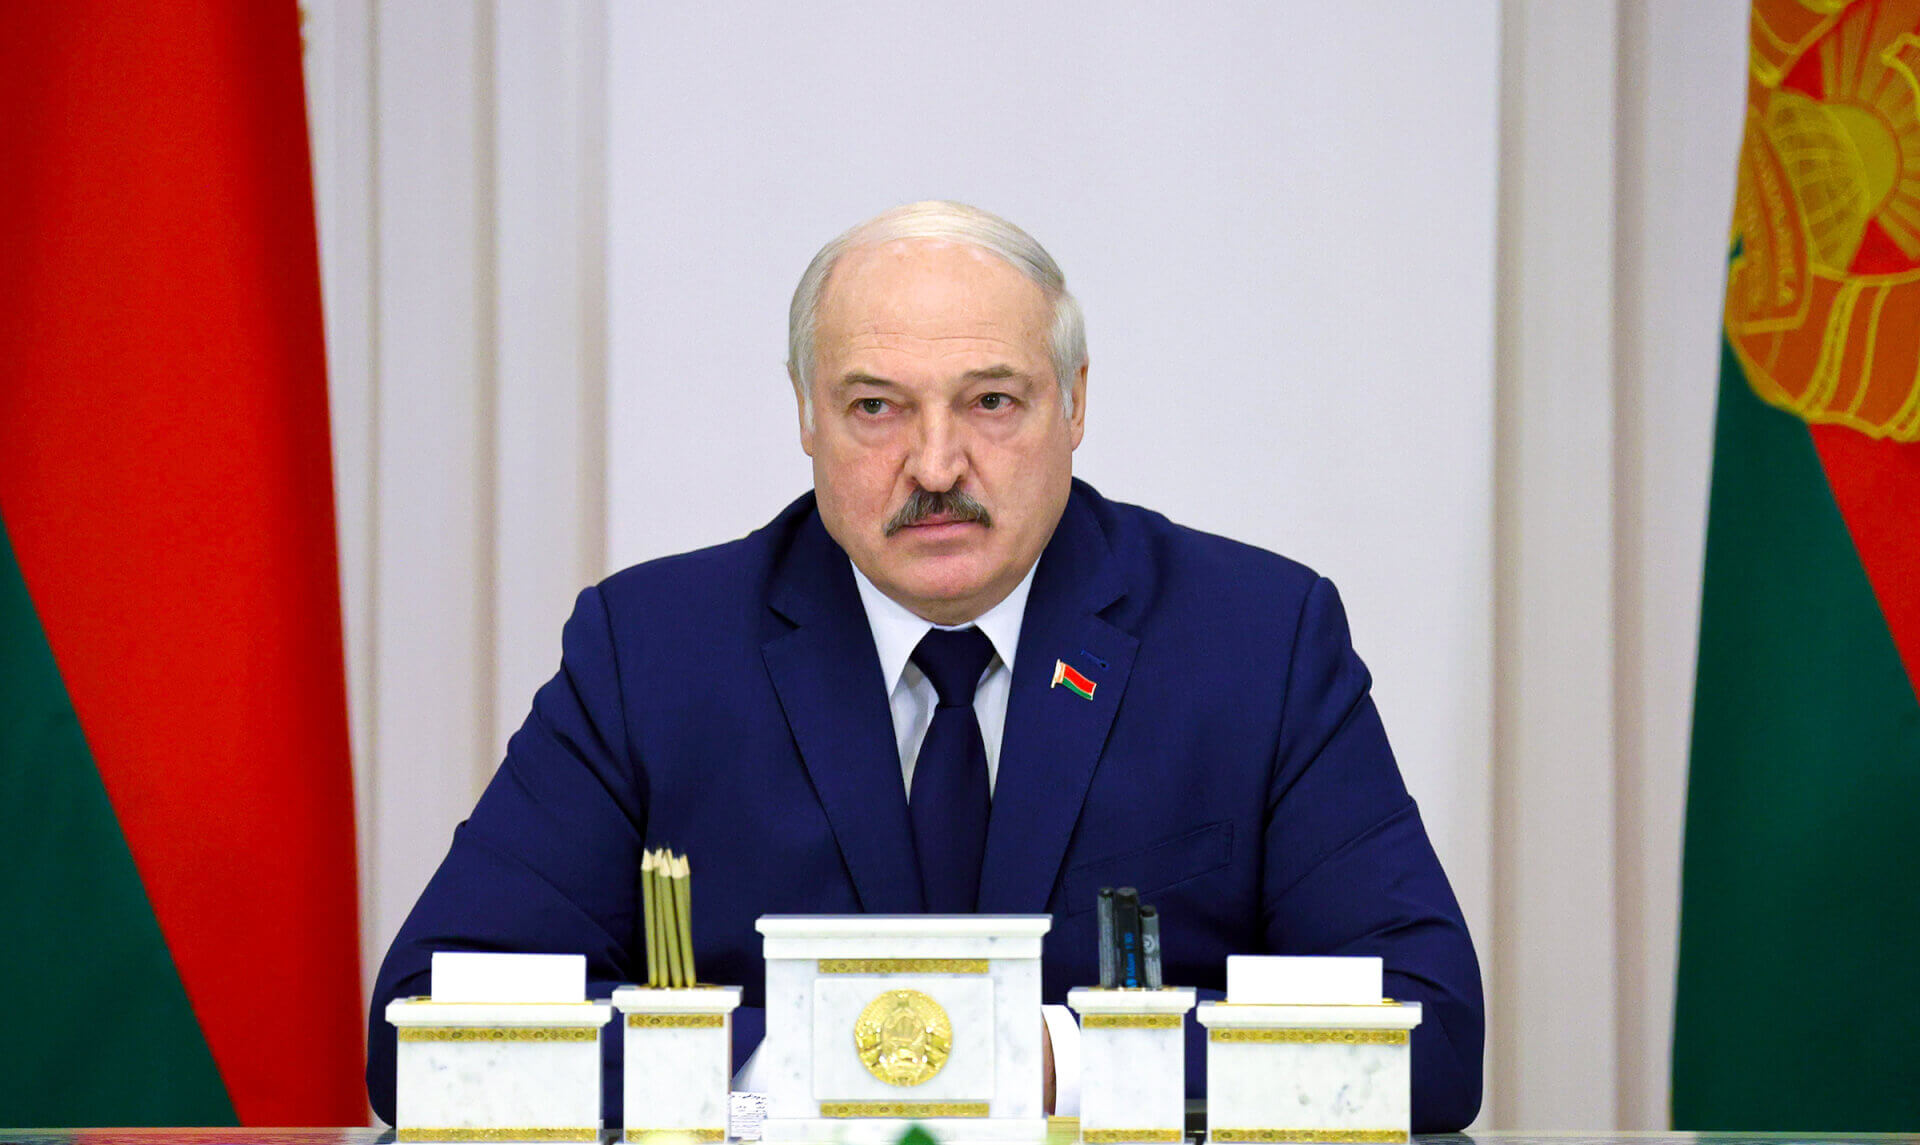 Lukashenko Admits Belarusian Troops May Have Helped Migrants Cross Poland Border